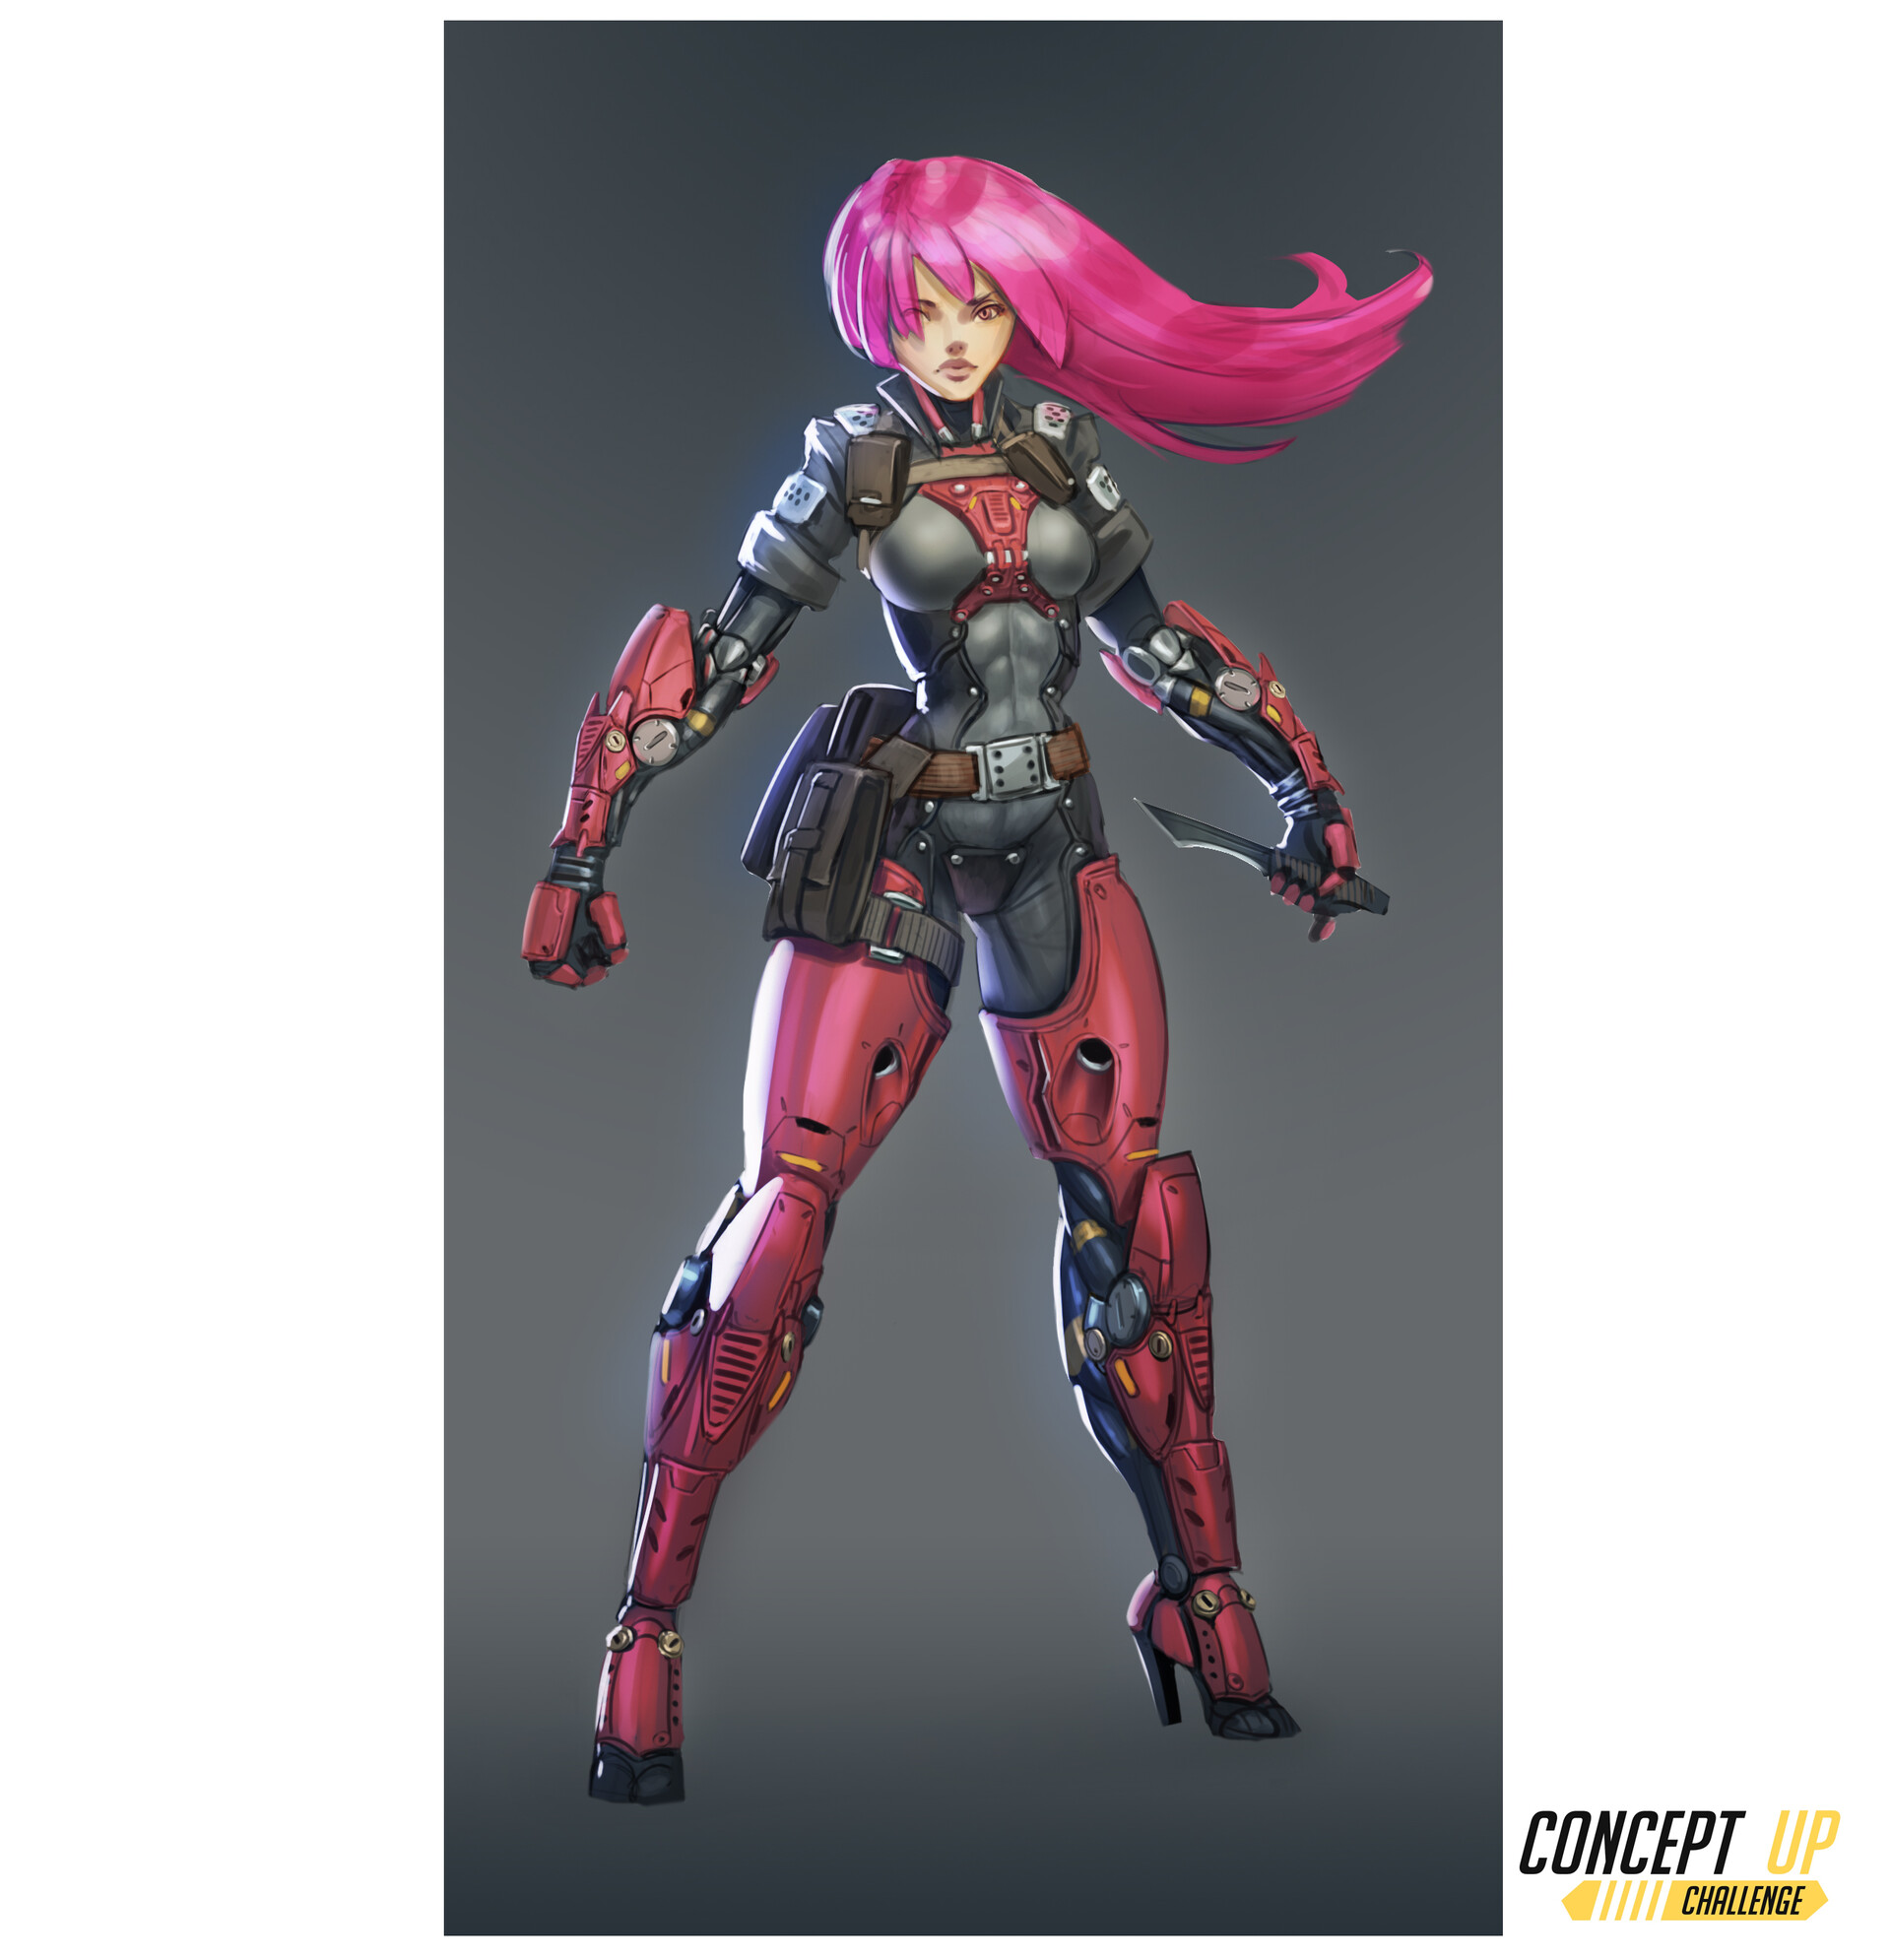 12 Destiny RP ideas  cyberpunk character, cyberpunk art, sci fi characters